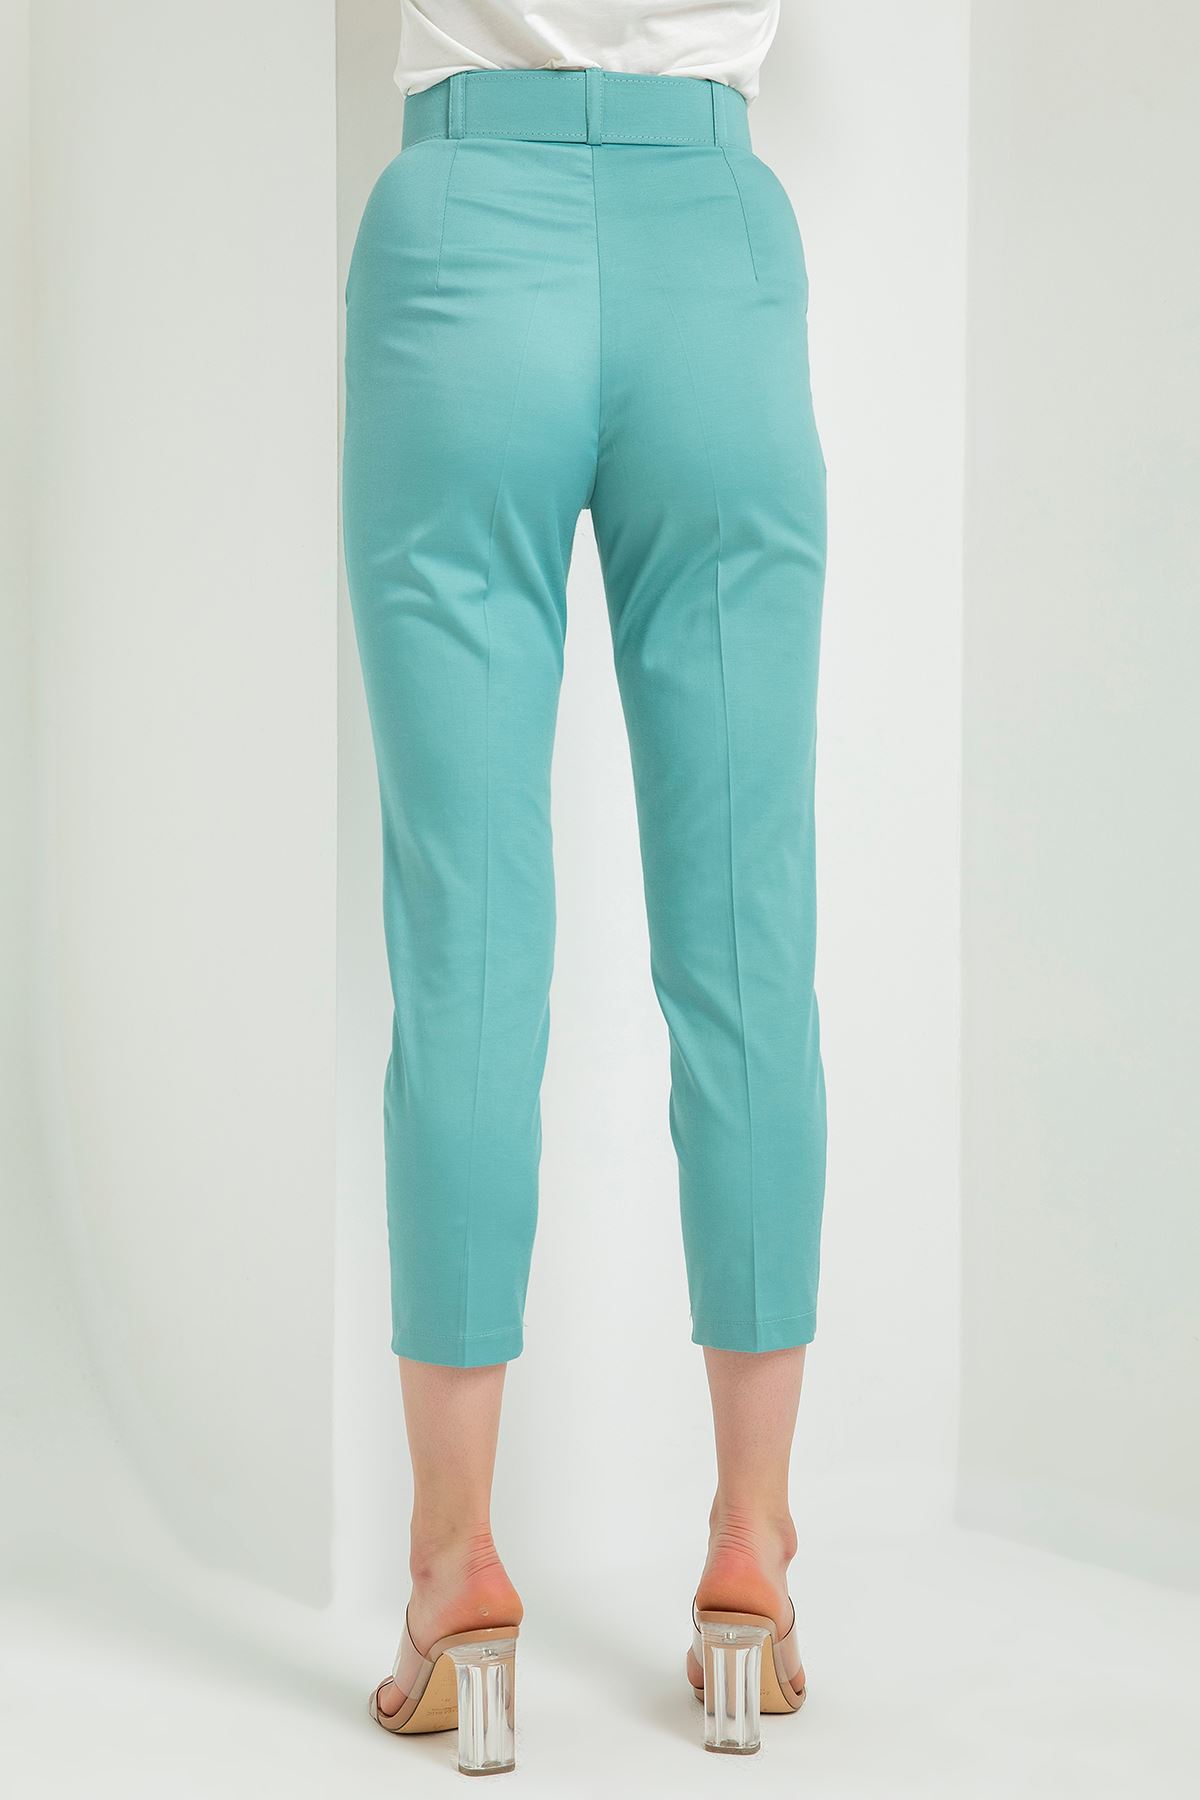 Atlas Fabric 3/4 Short Belted Women'S Trouser - Mint